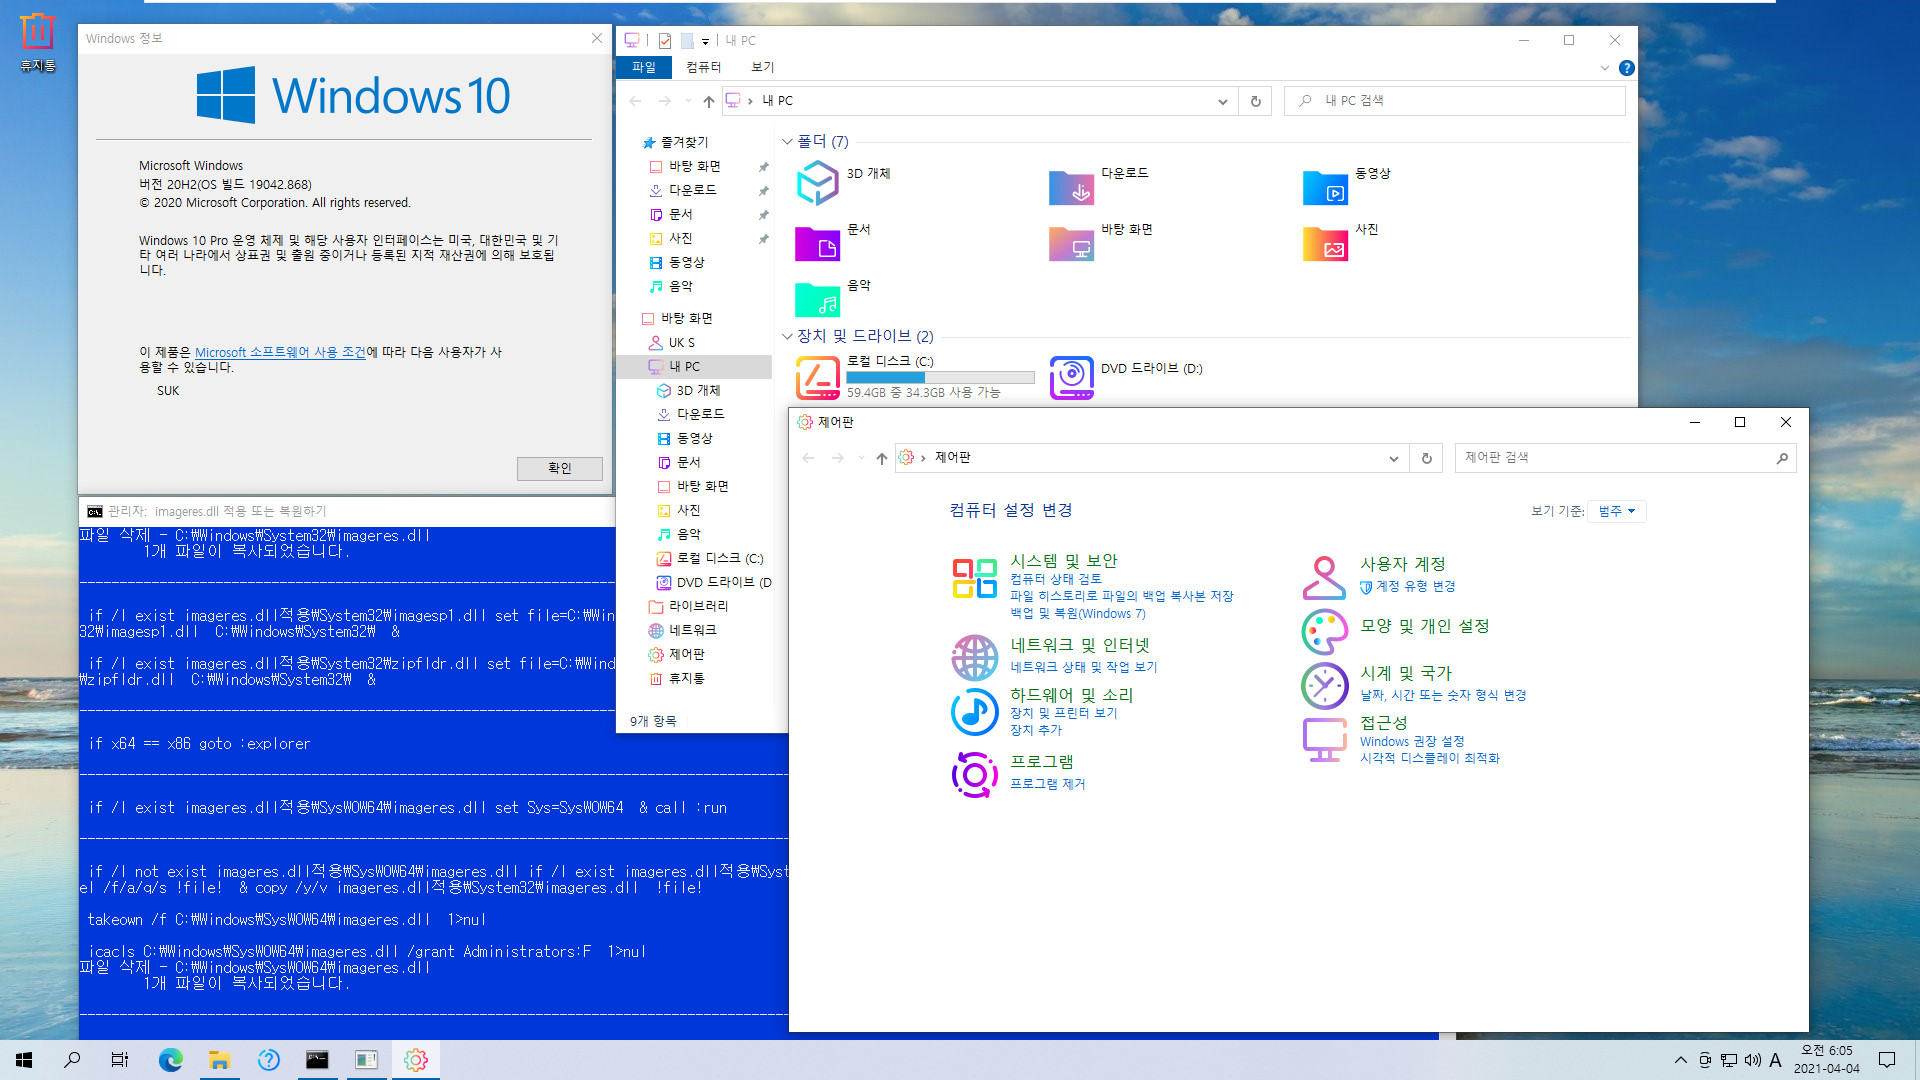 imageres.dll 윈도우 10 버전 1809용 파일이고 윈도우 7 라이브러리 안에 폴더 아이콘들이 정상 표시되기 때문에 윈도우 7 종료와 부팅 배경화면만 정상 표시되도록 7 원본 imageres.dll을 합쳐서 테스트 2021-04-04_060514.jpg